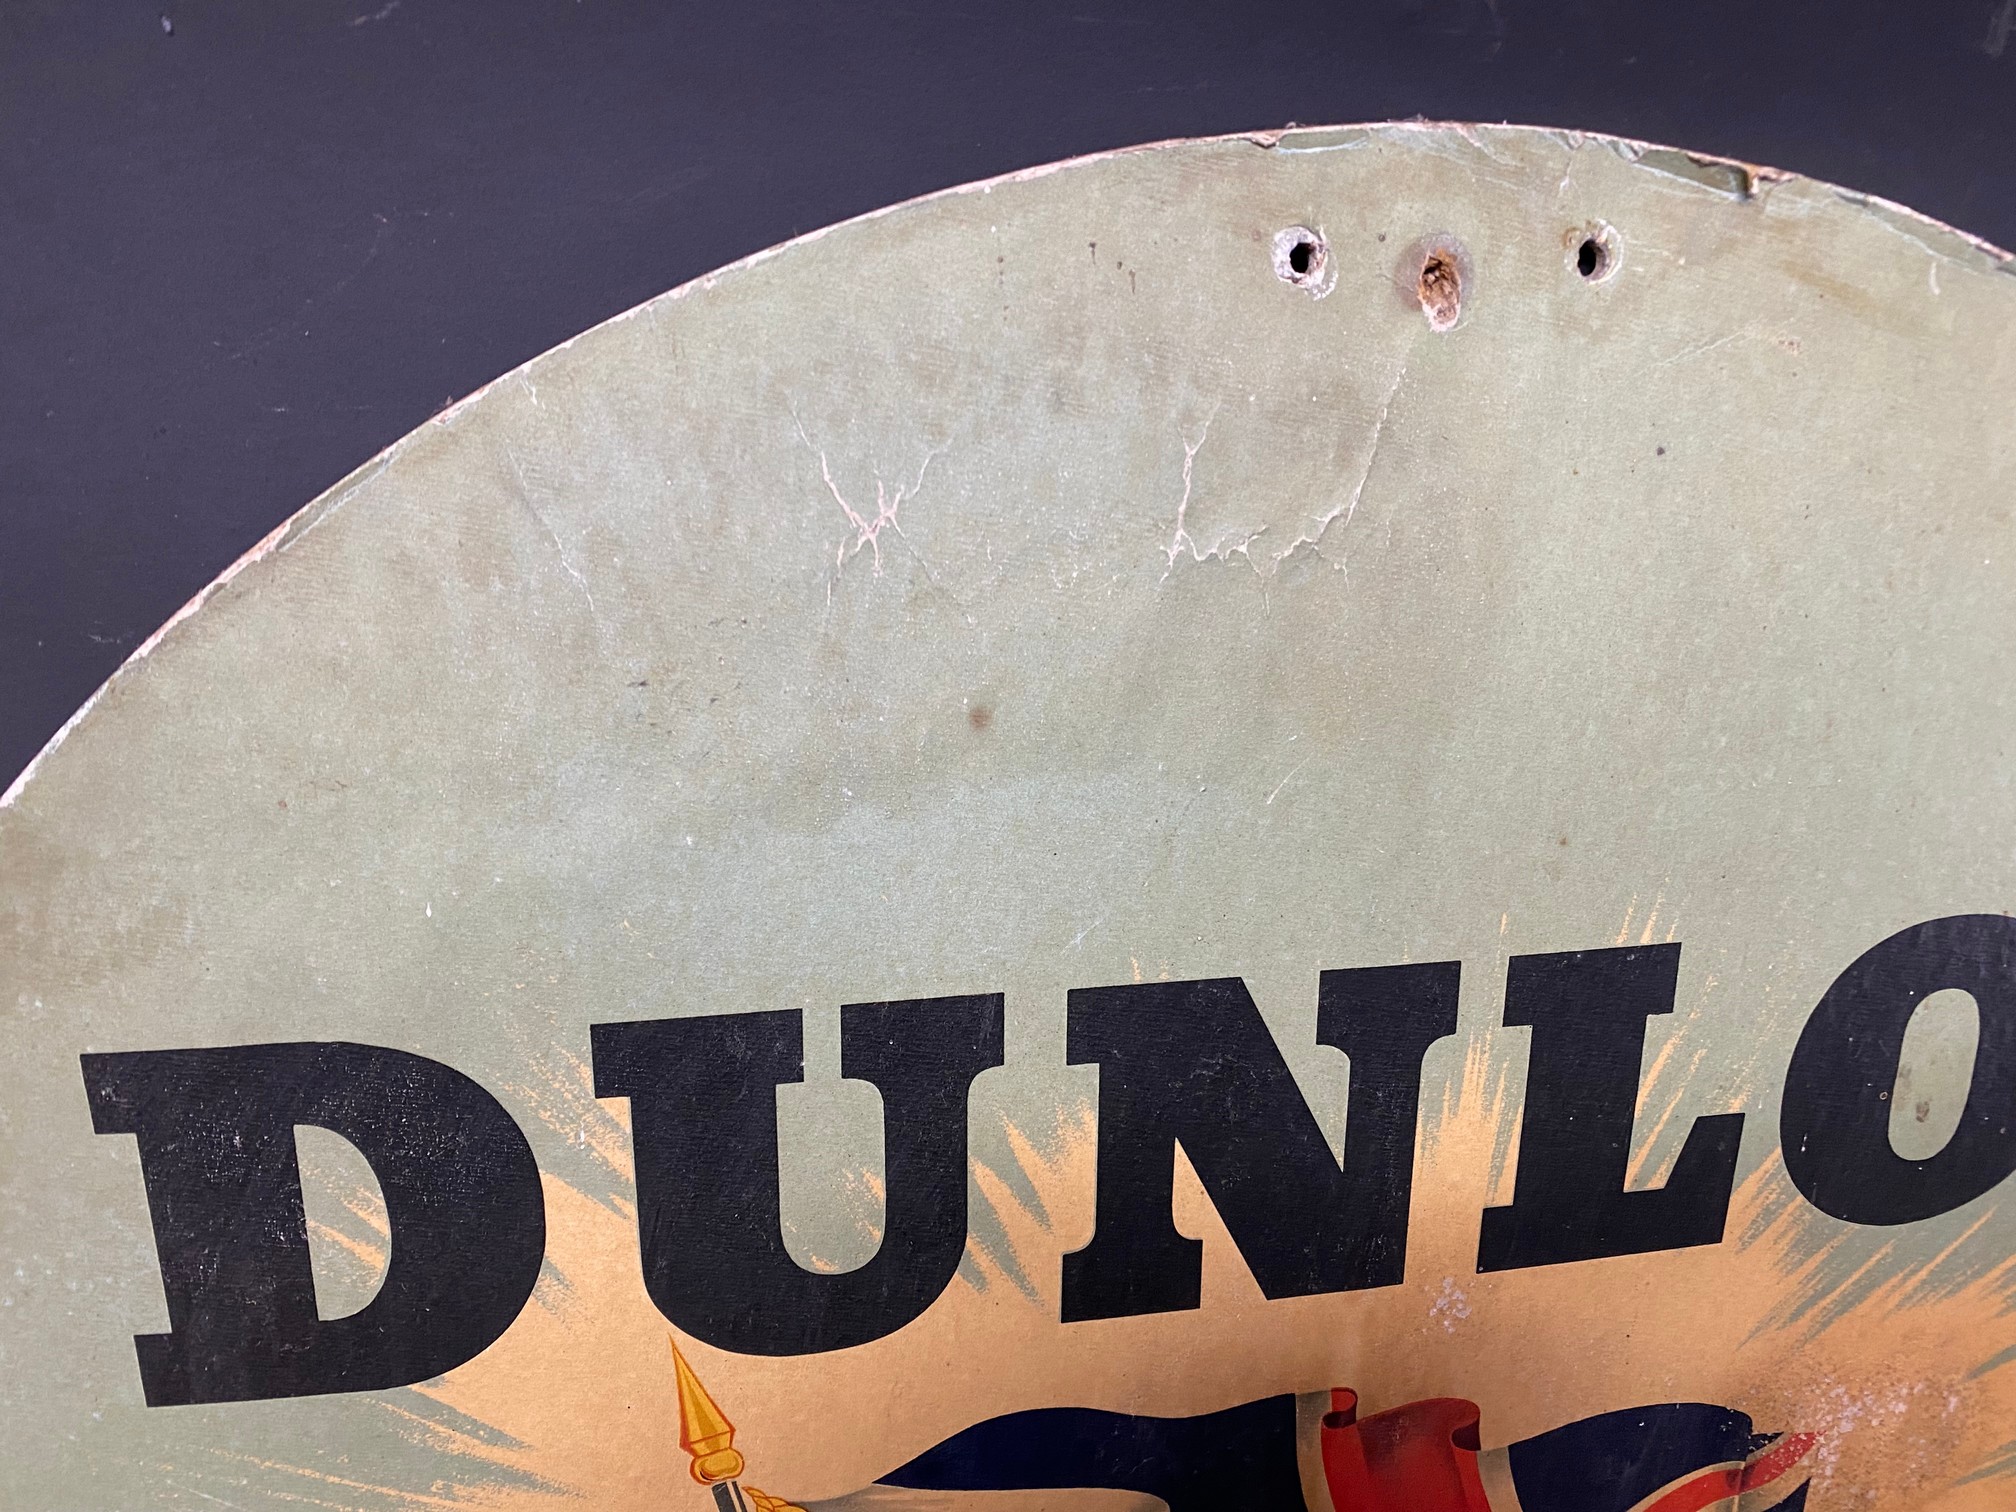 A Dunlop 'As British as the flag' circular cardboard advertising sign, 24" diameter. - Image 2 of 4